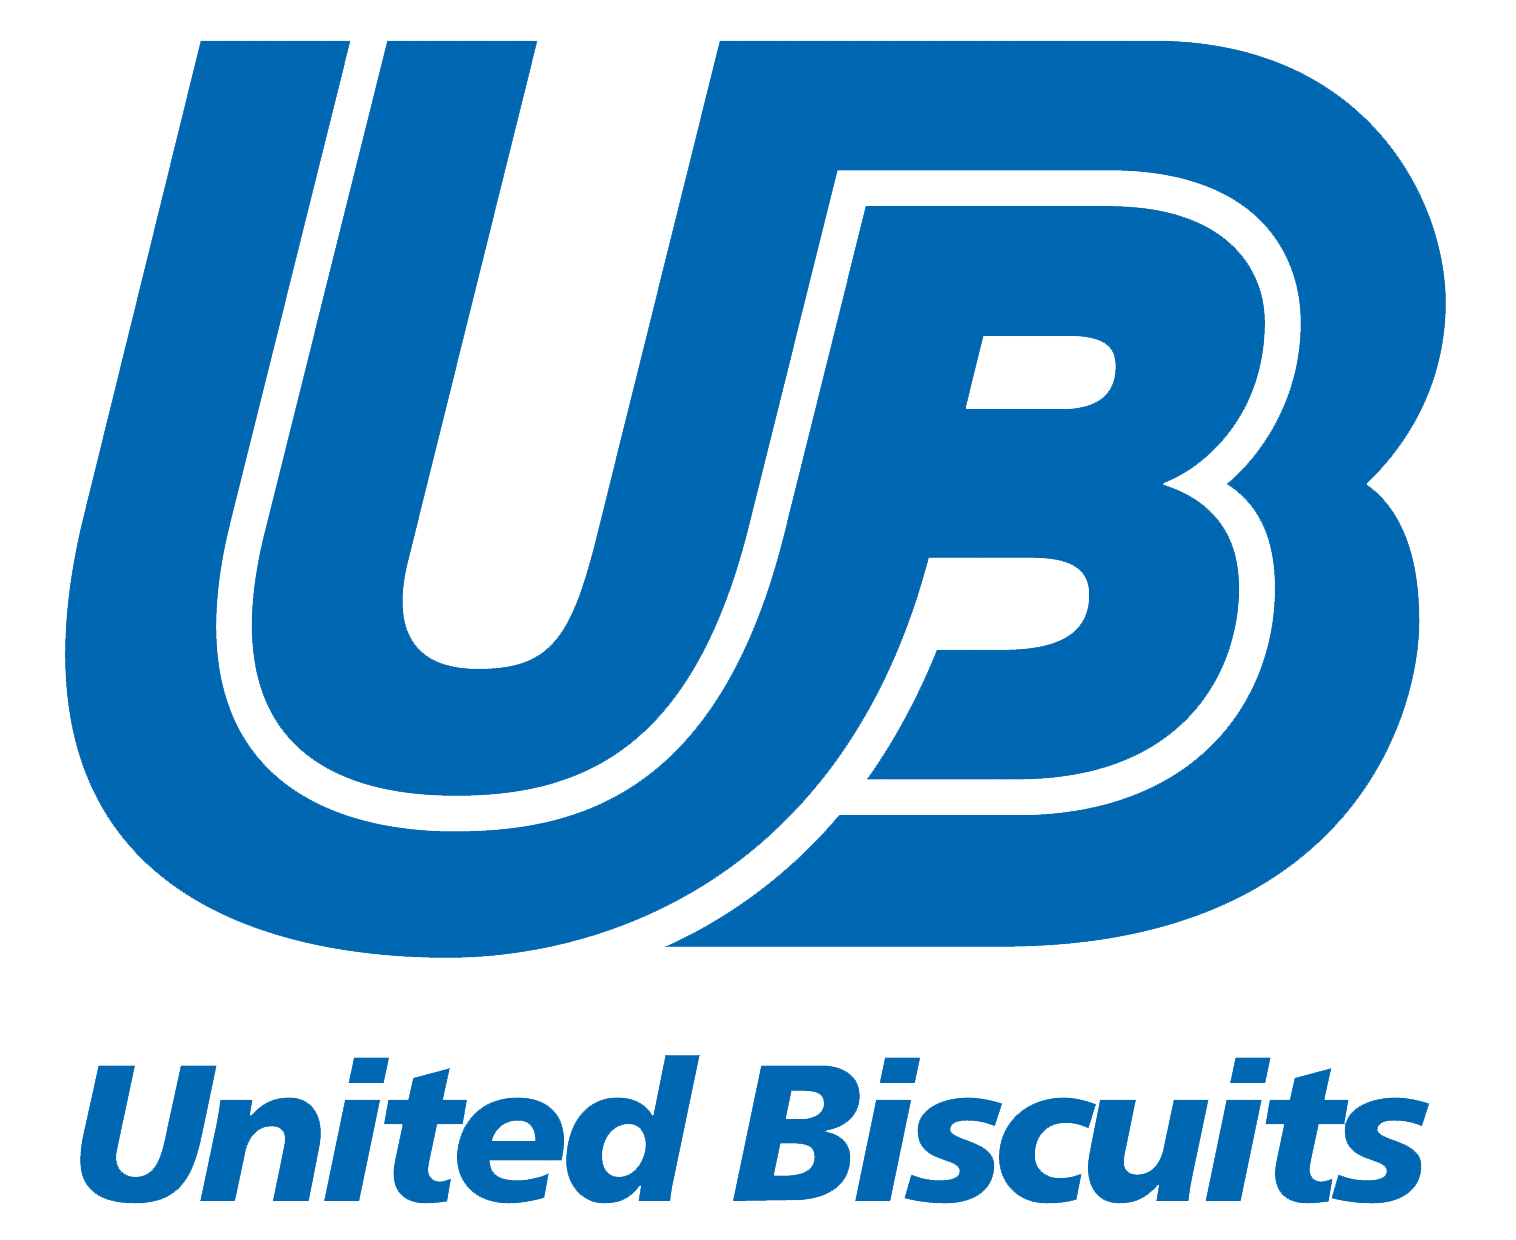 United Biscuits - logo